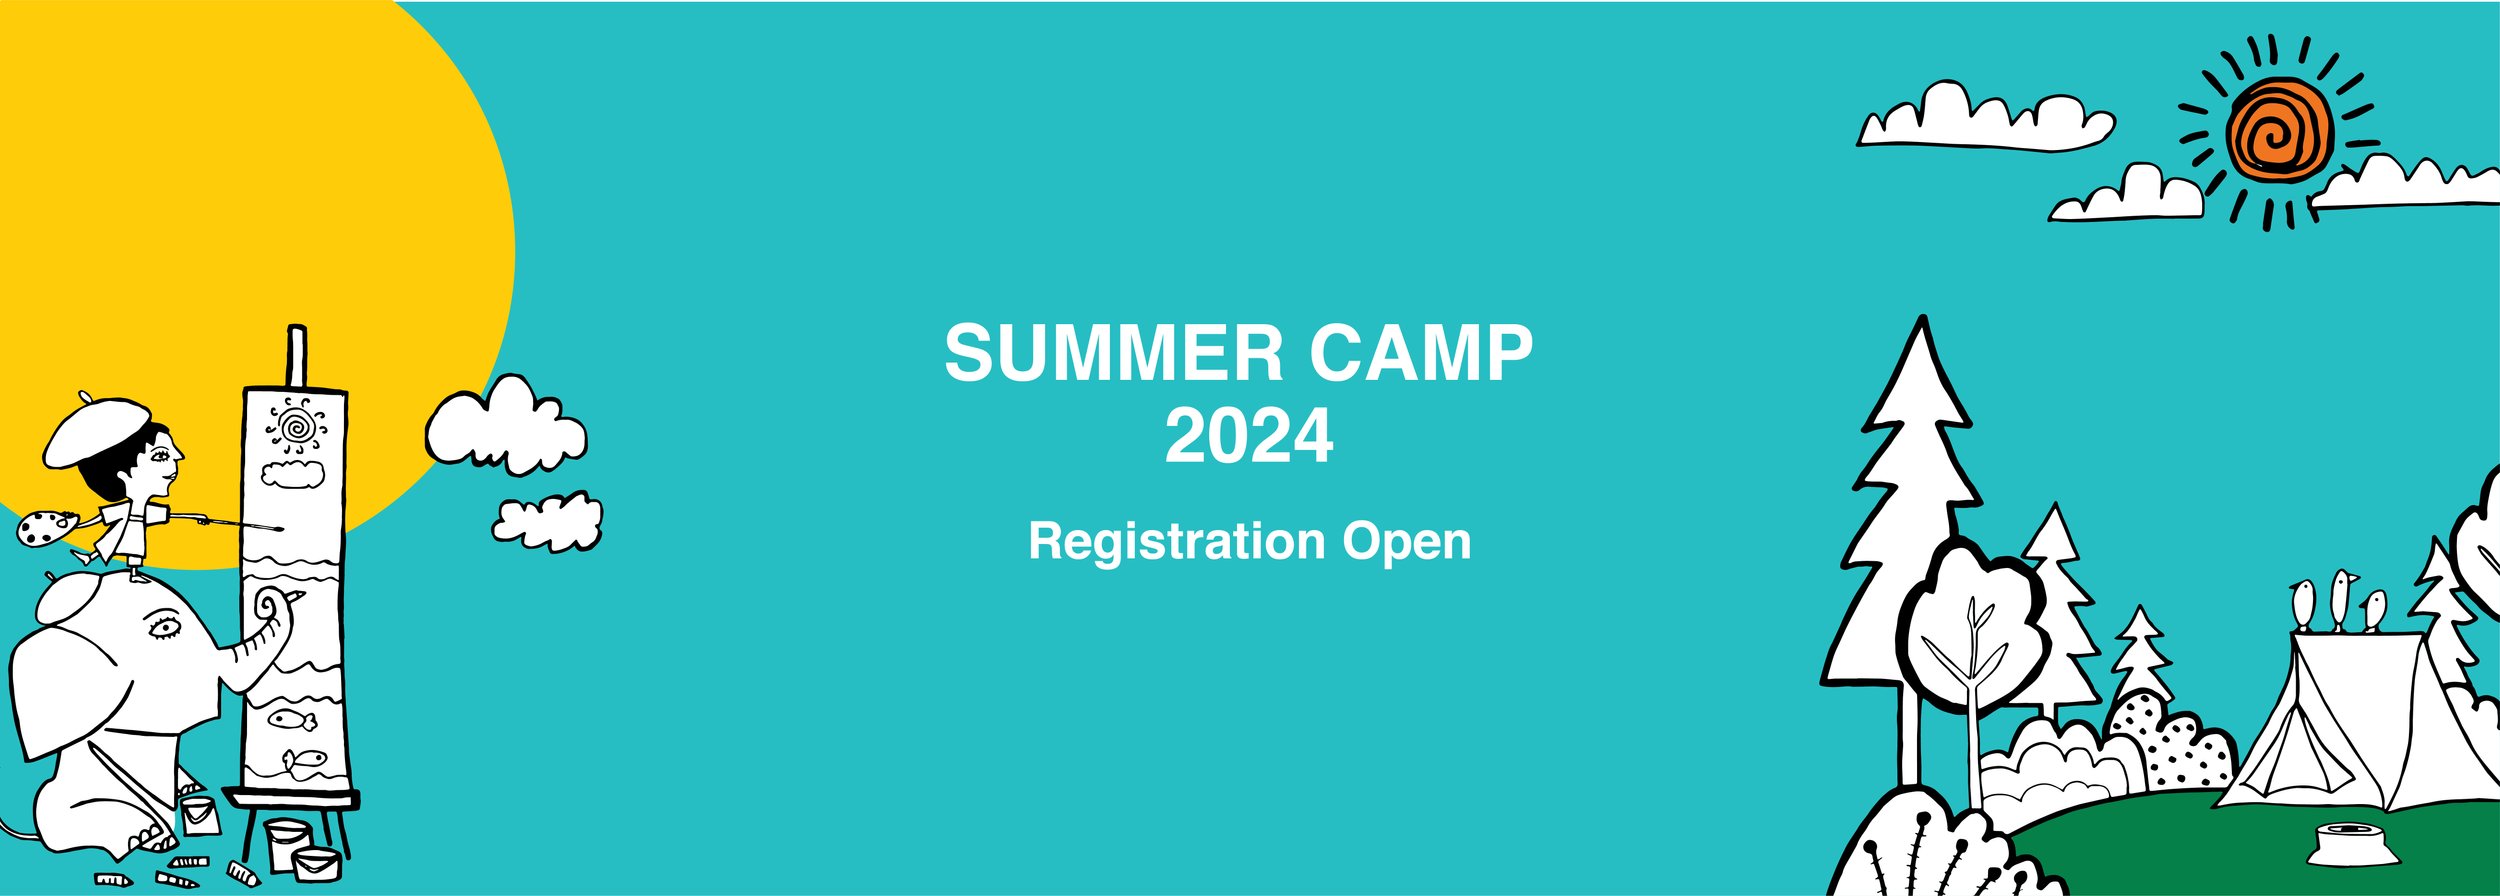 summer camp 2024.jpg